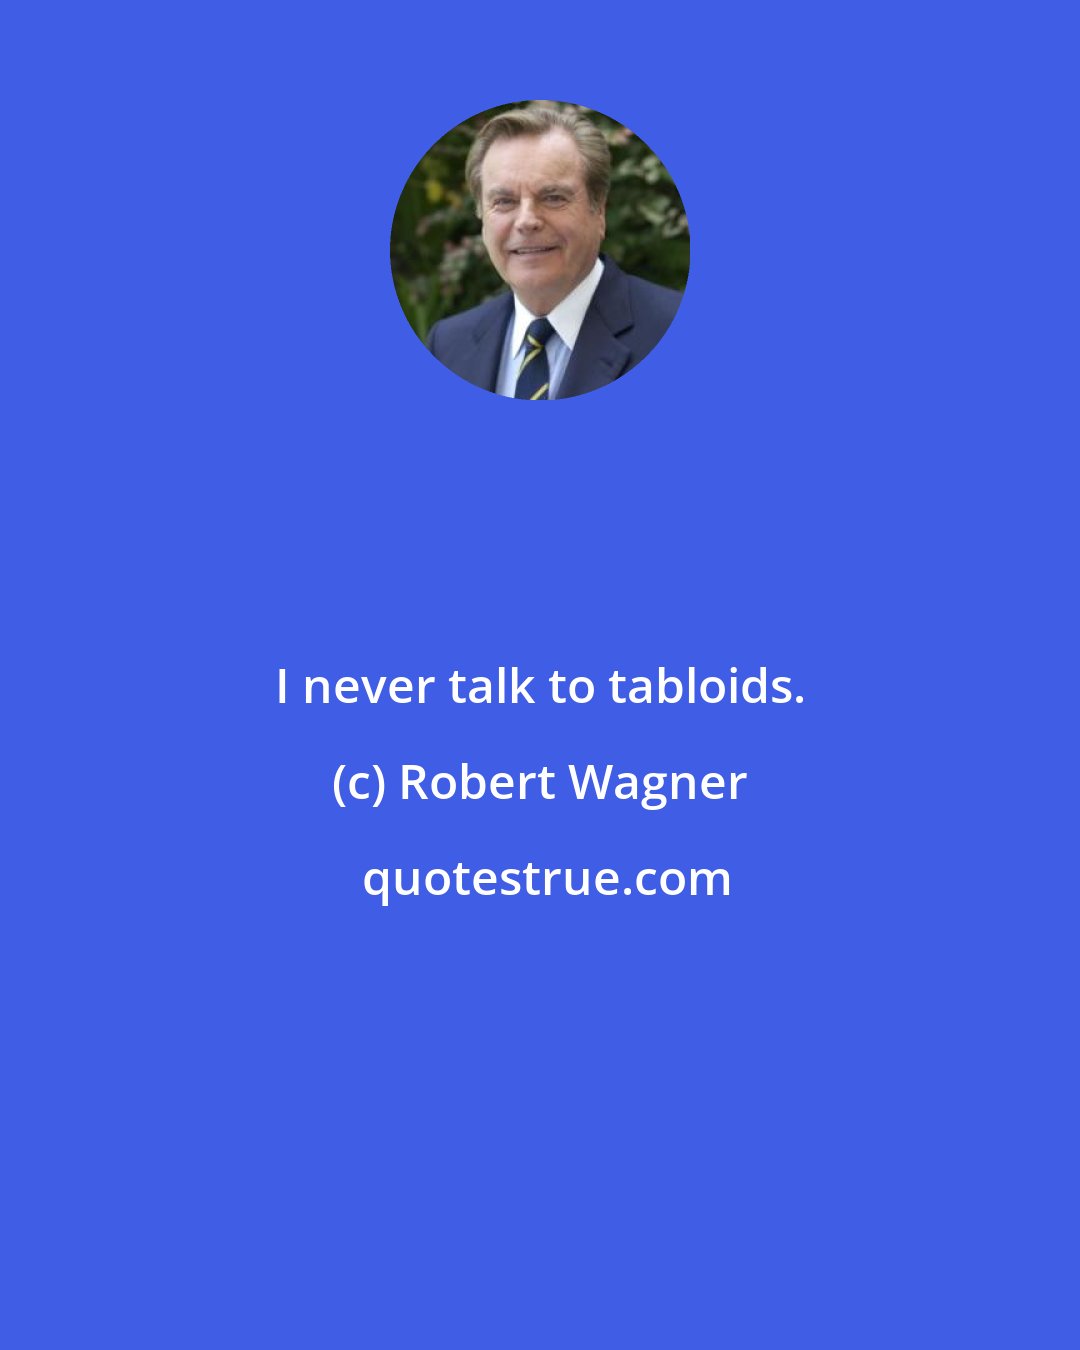 Robert Wagner: I never talk to tabloids.